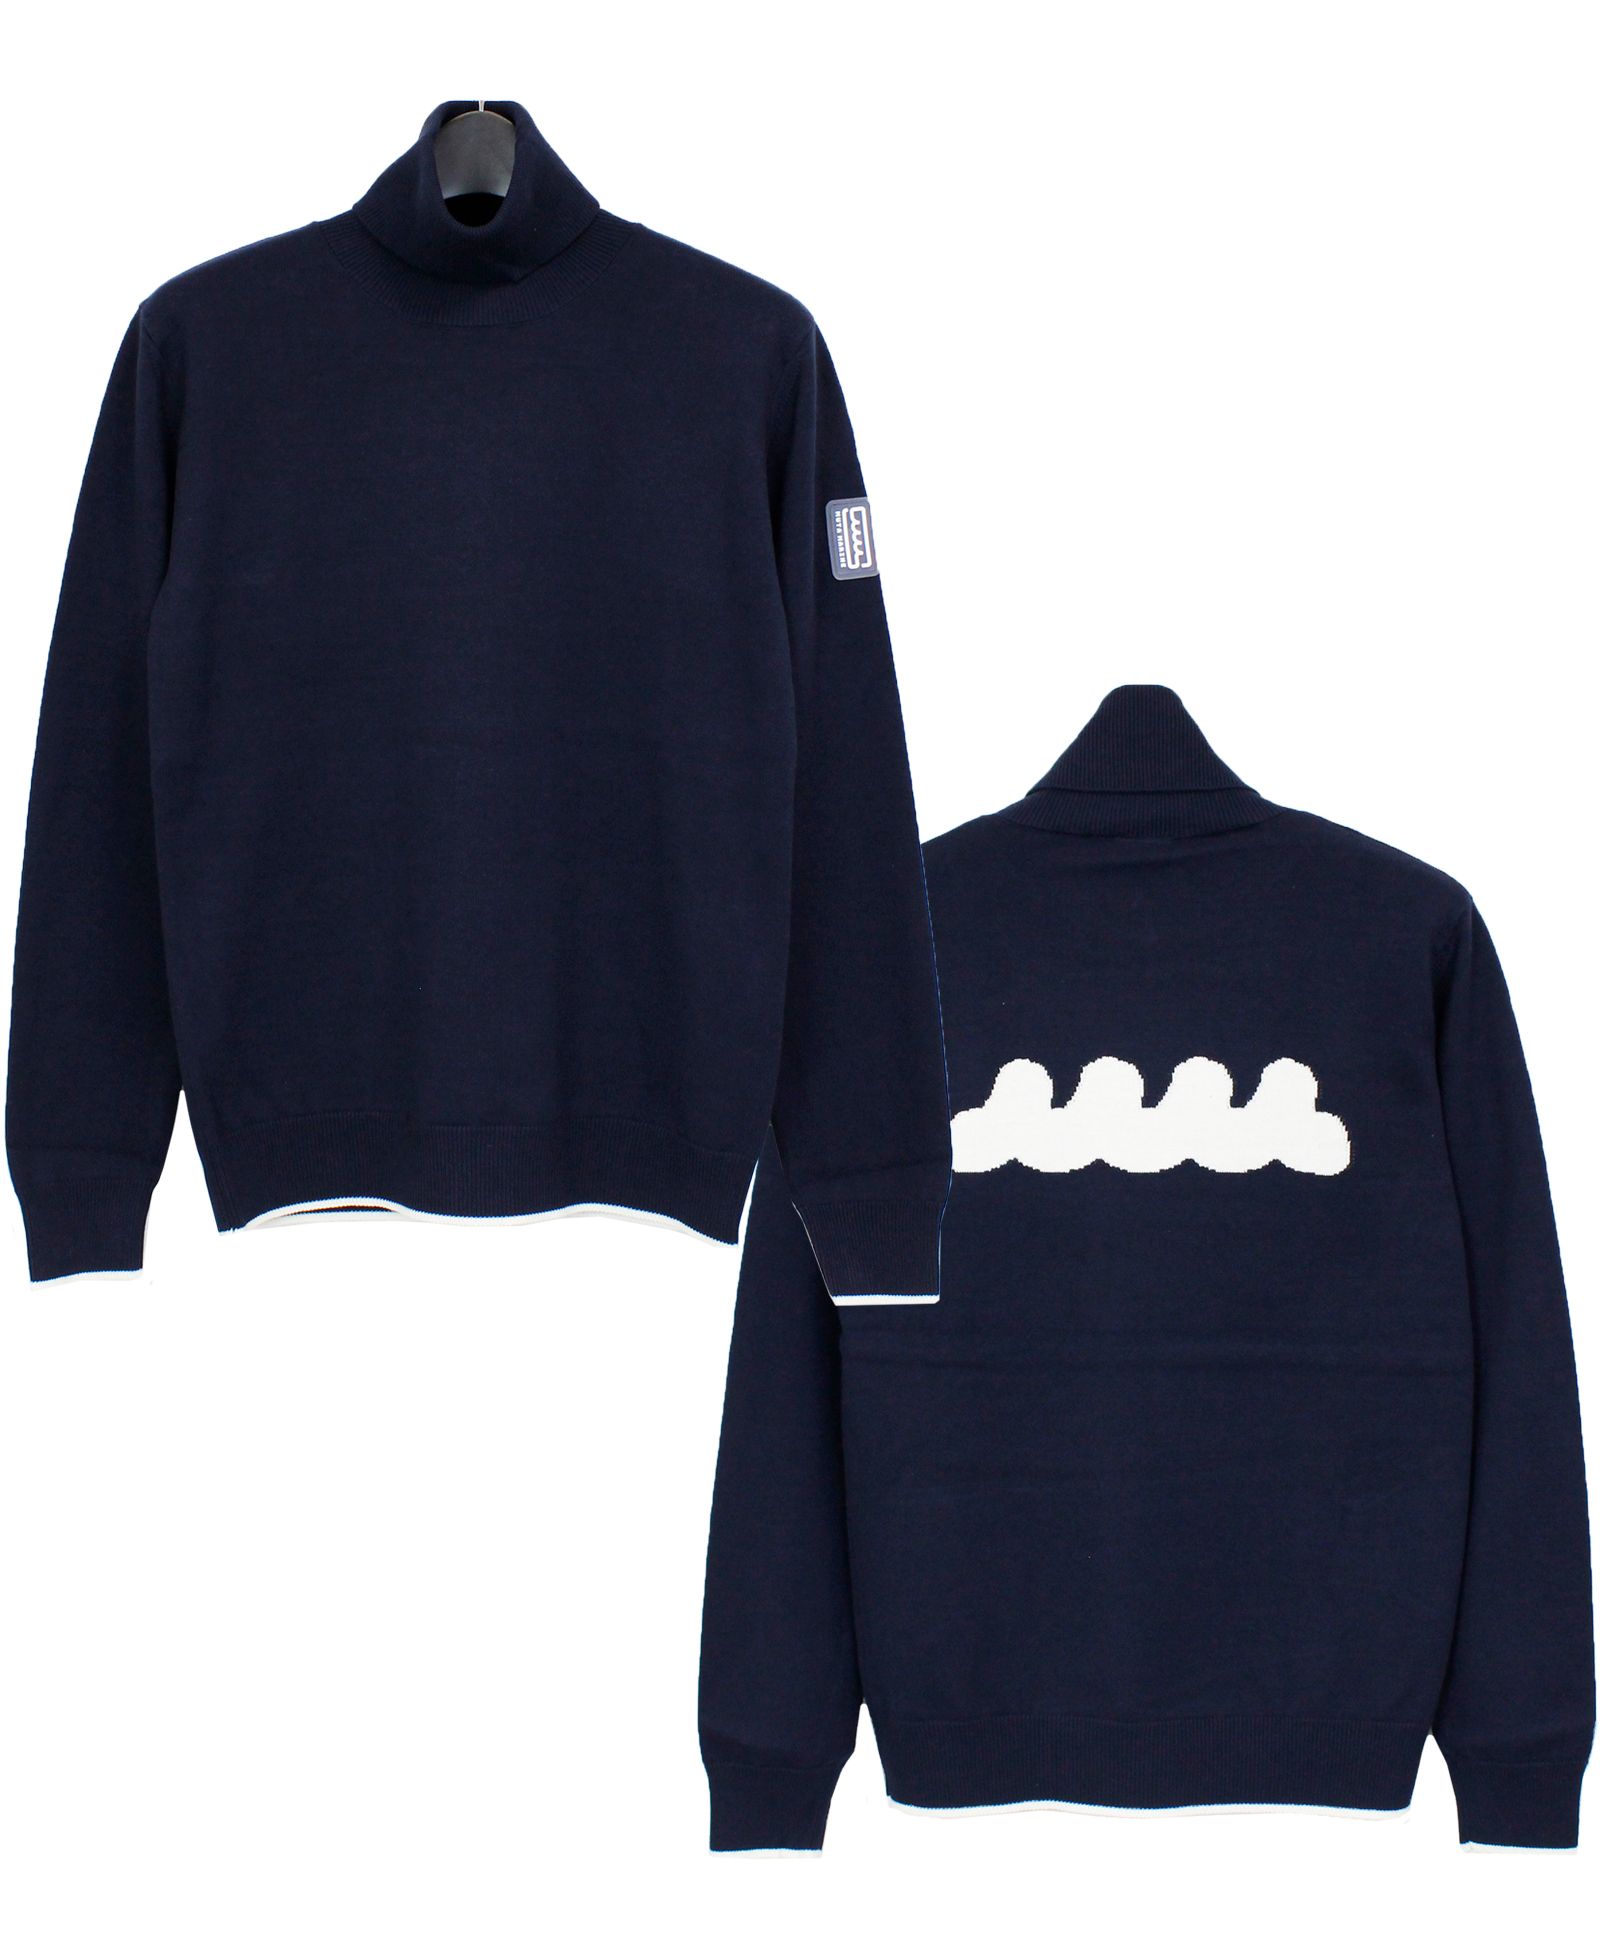 muta marine タートルネックセーター サイズ4 - ウエア(男性用)